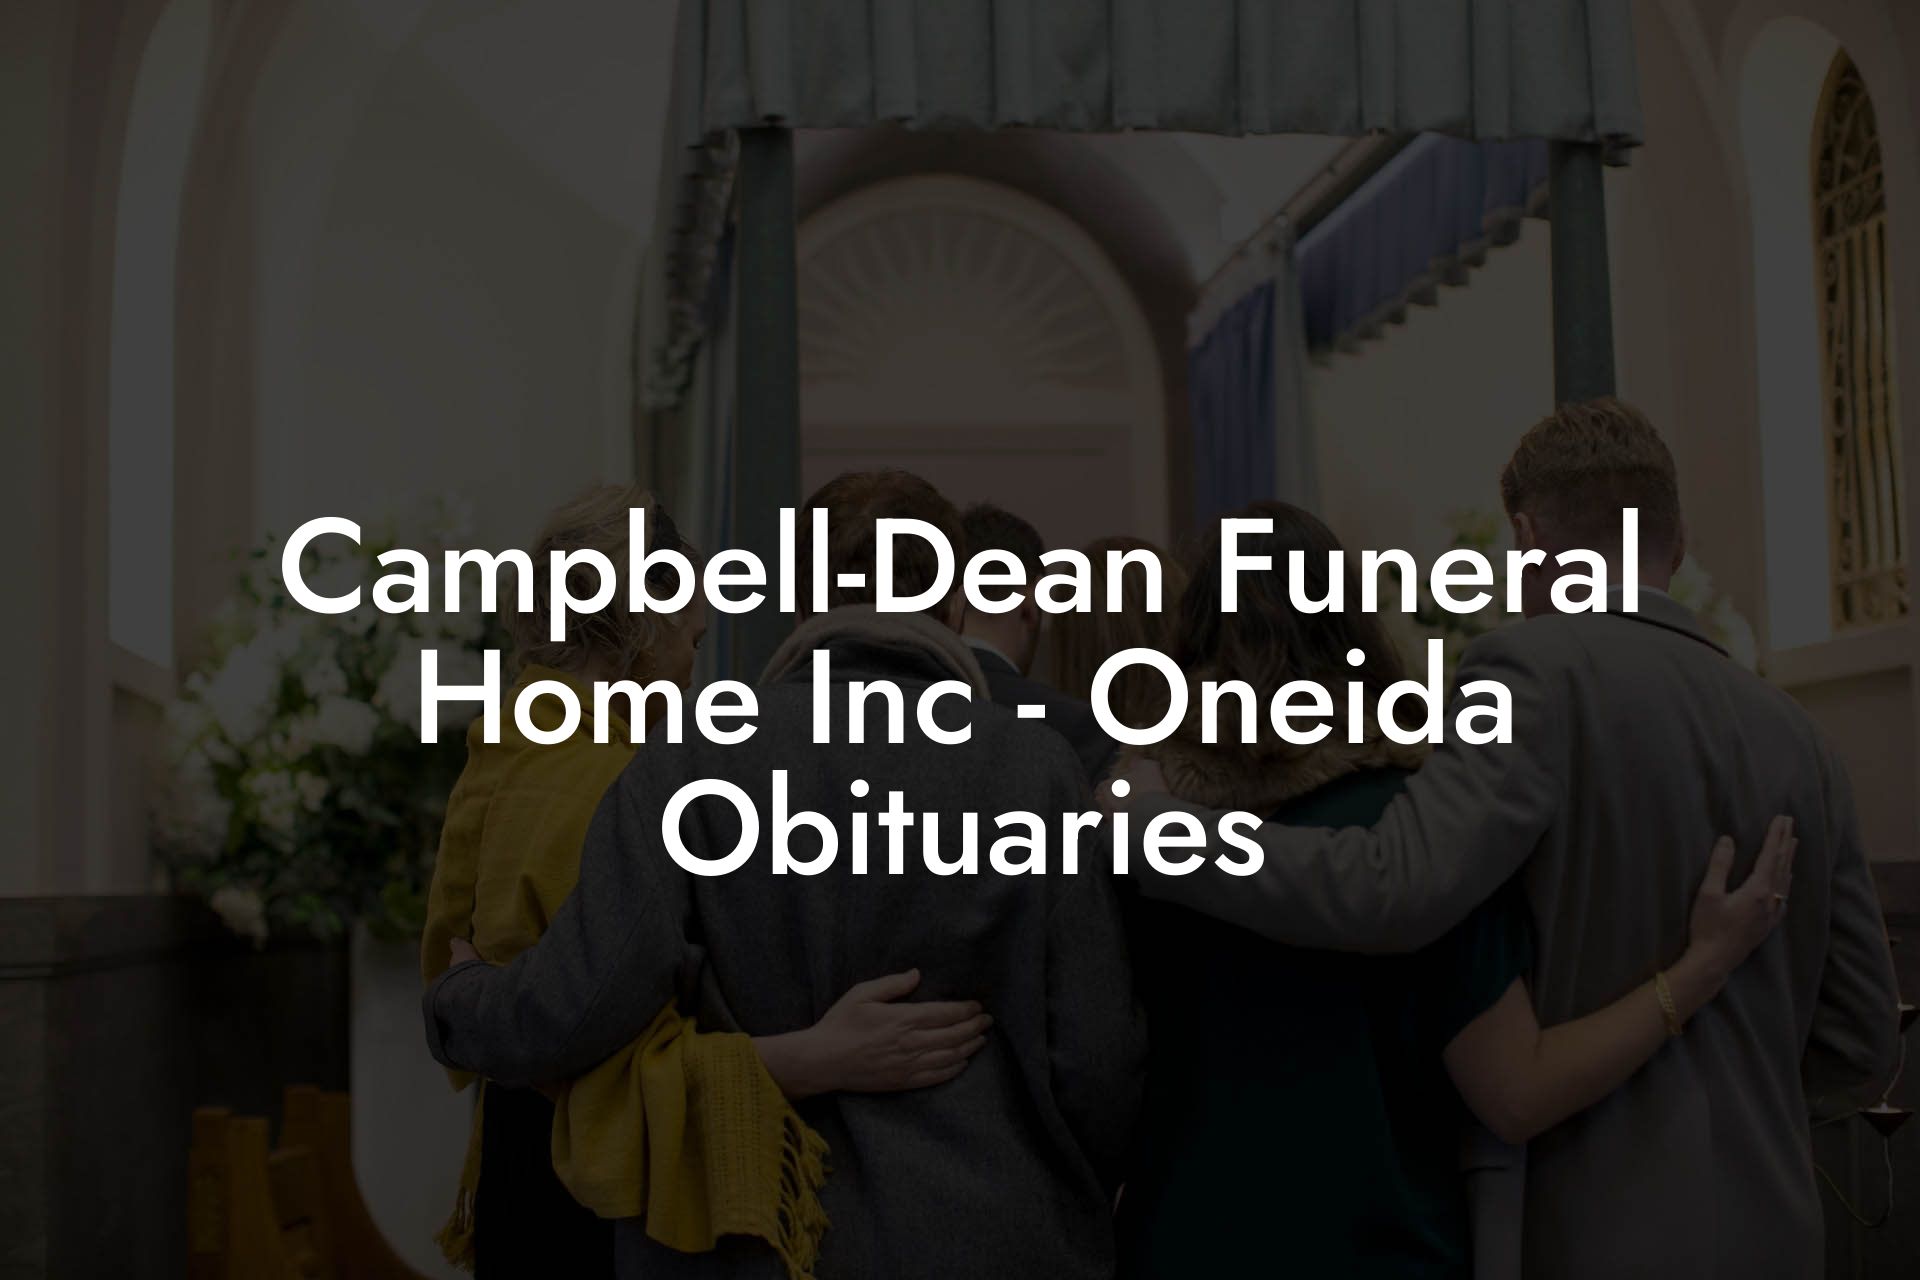 Campbell-Dean Funeral Home Inc - Oneida Obituaries